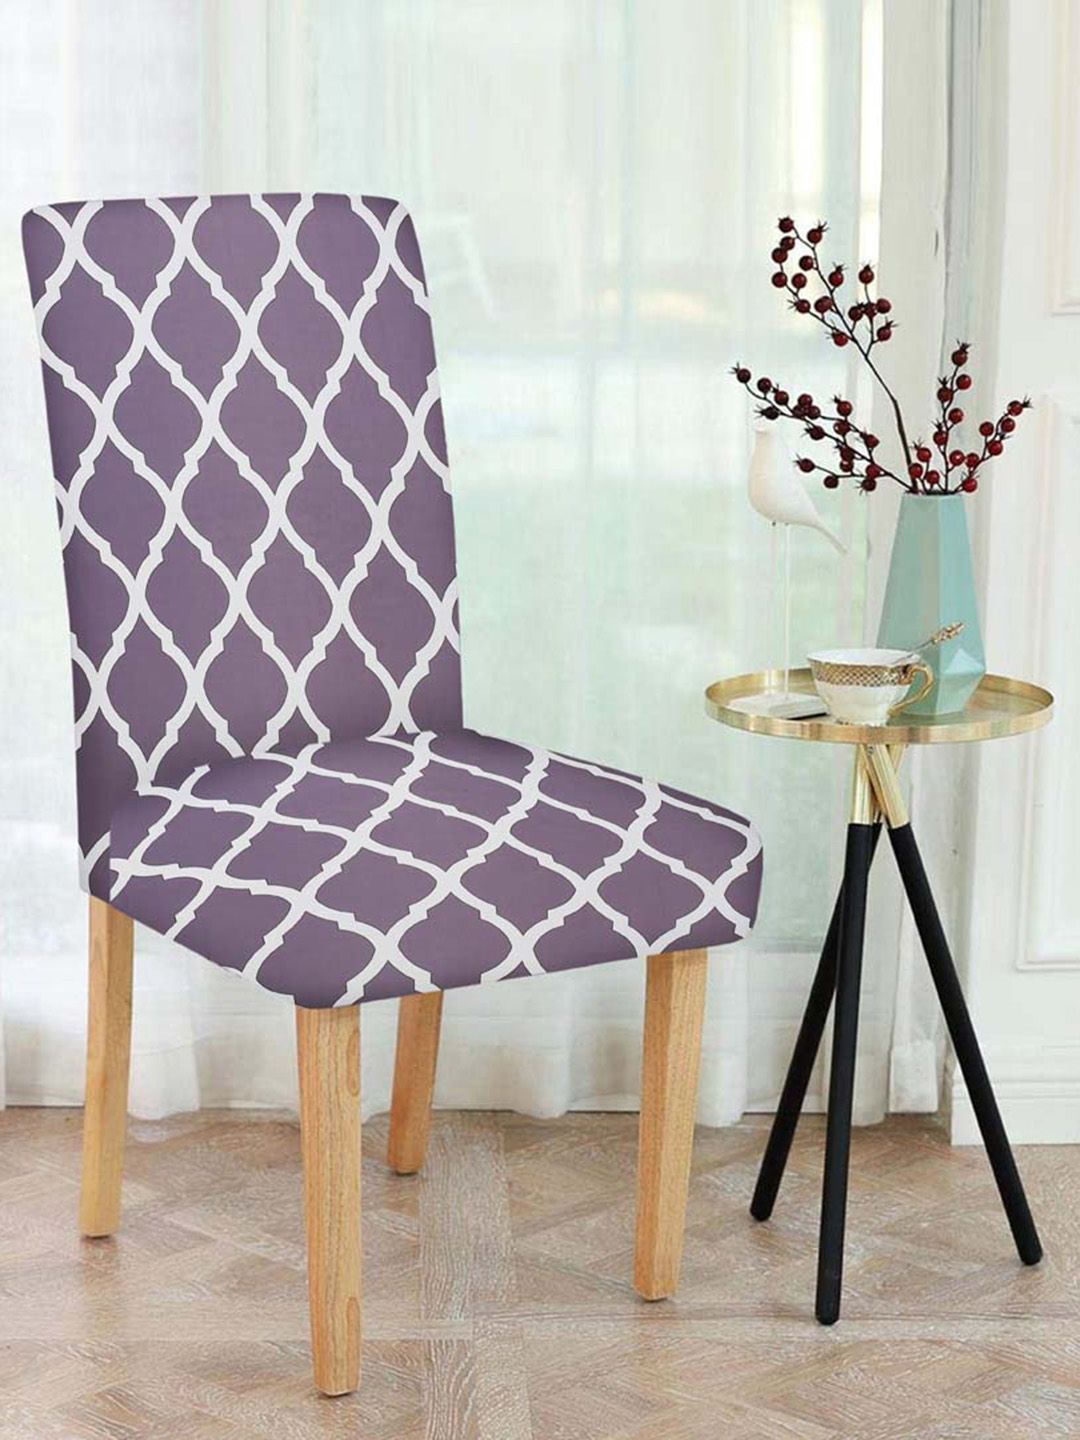 Slushy Mushy Pack of 4 Purple & White Printed Chair Covers Price in India